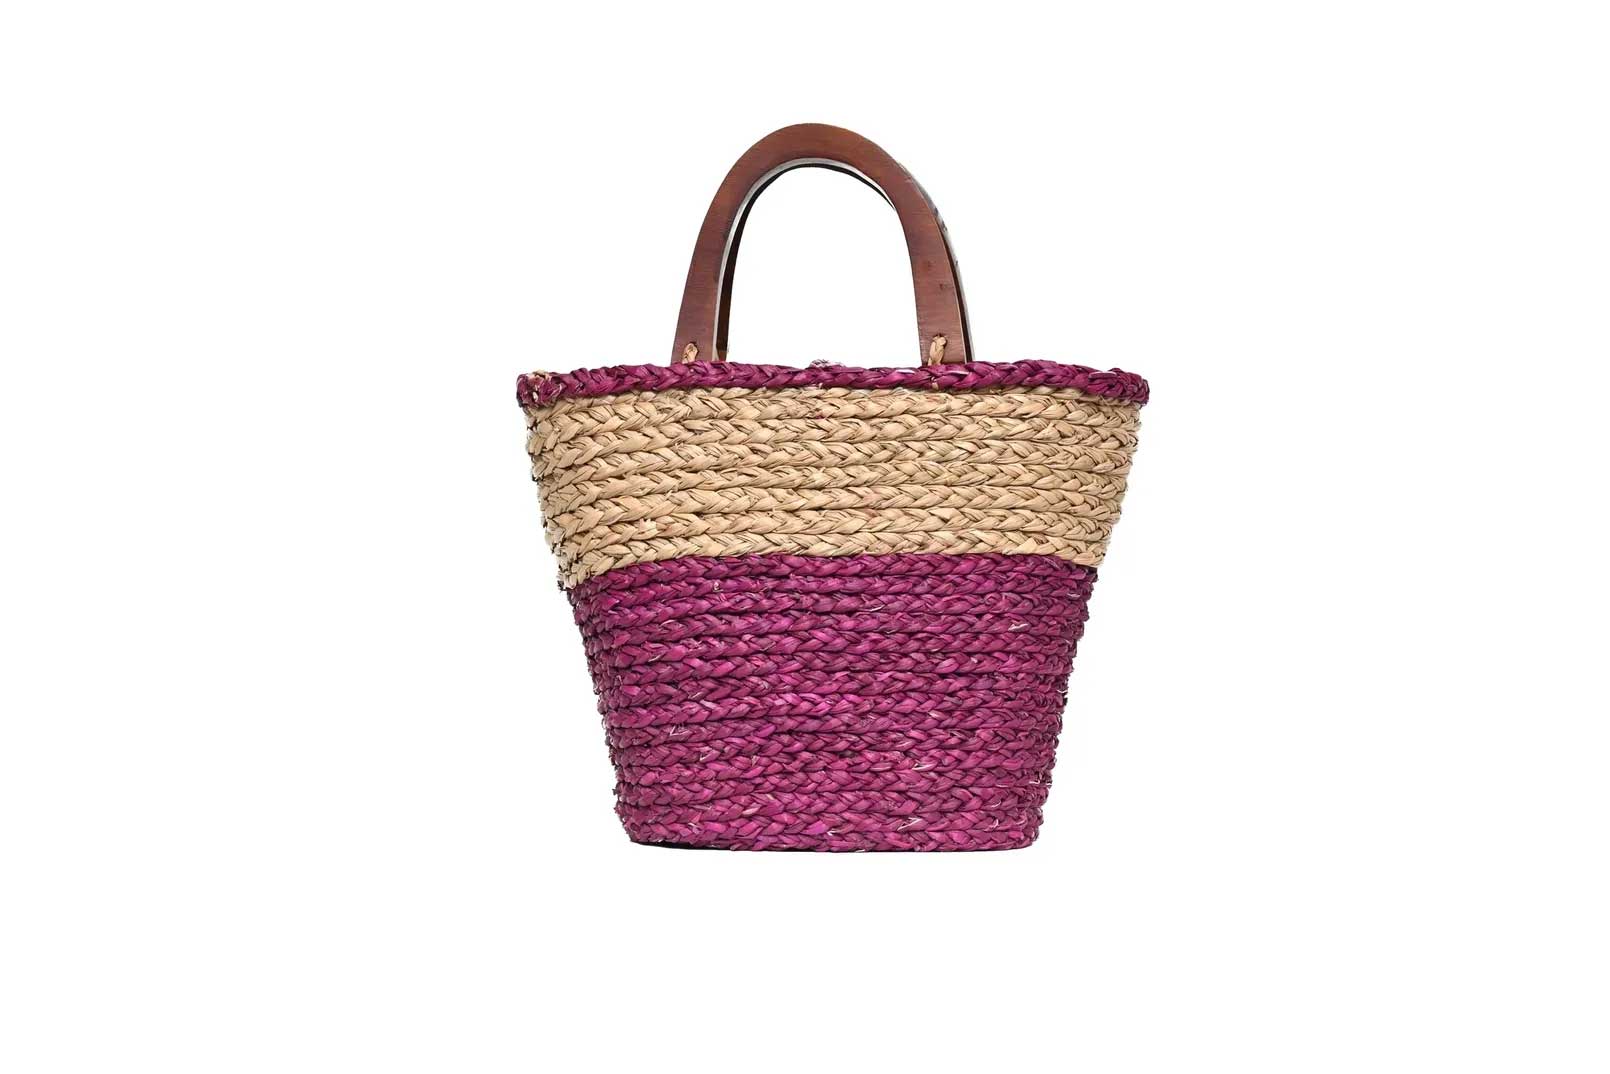 Wooden Handle Bag - Pink & Natural-Karuna Dawn-stride